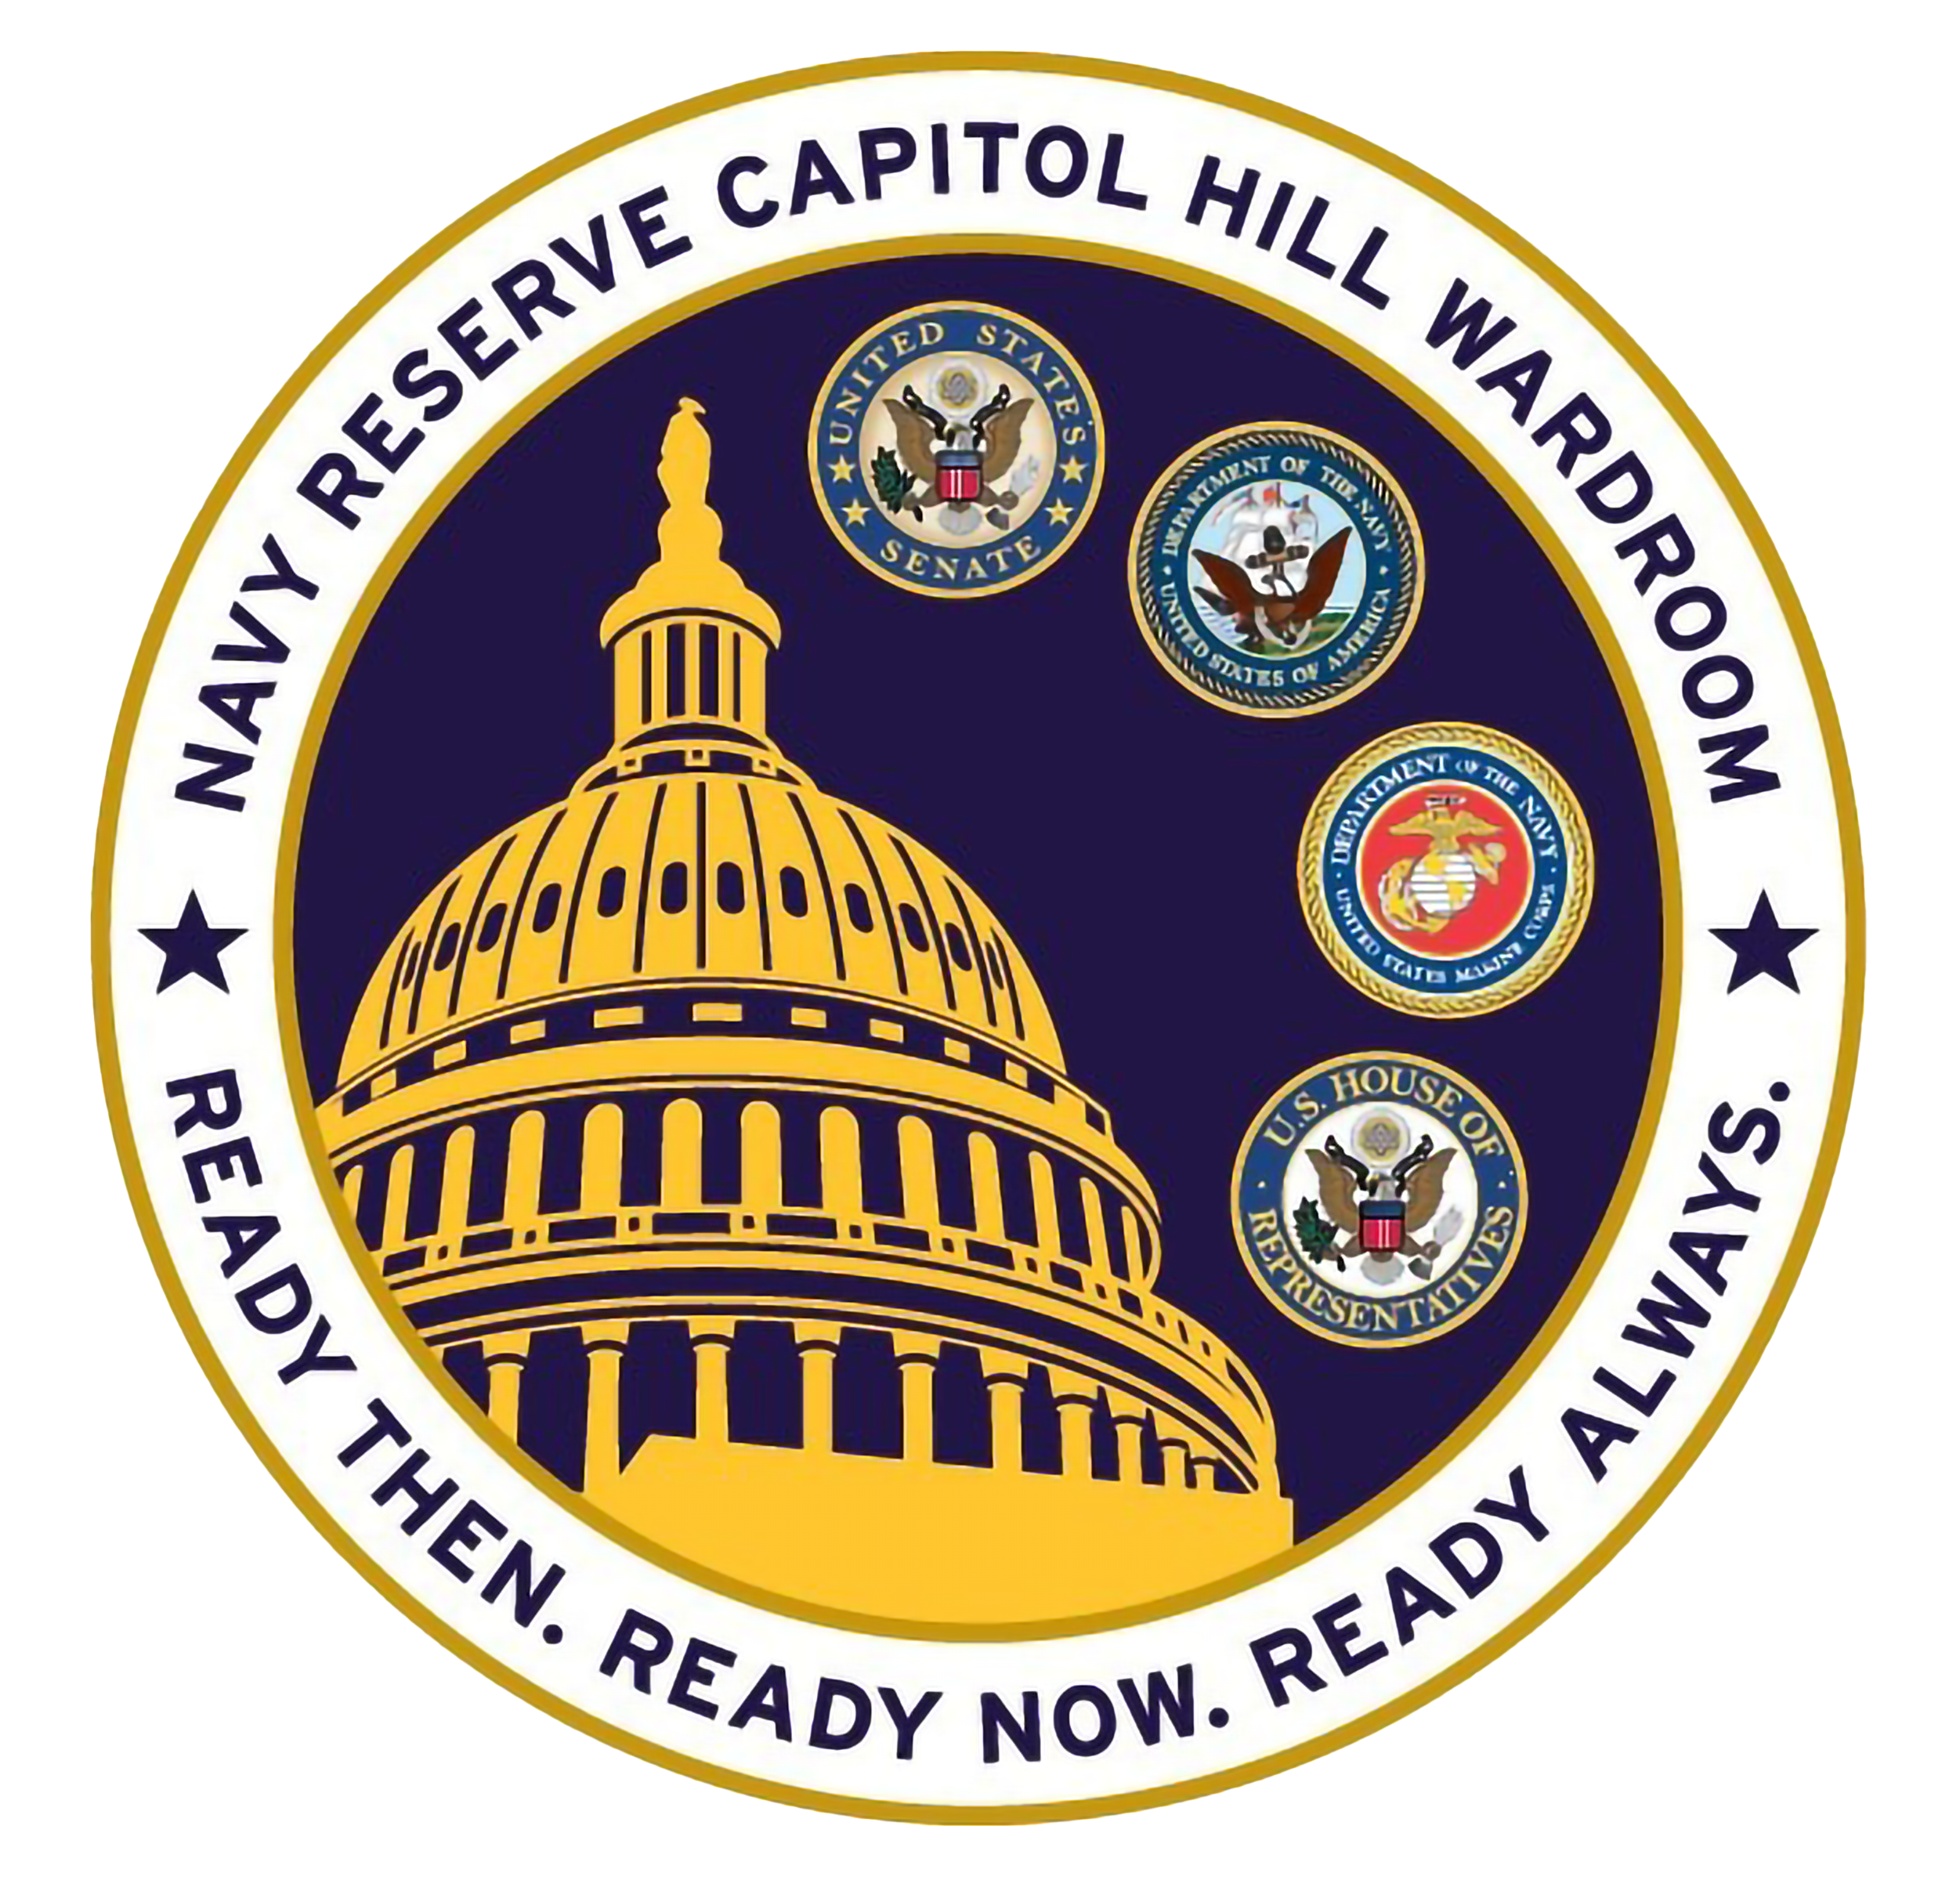 Navy Reserve Capitol Hill Wardroom